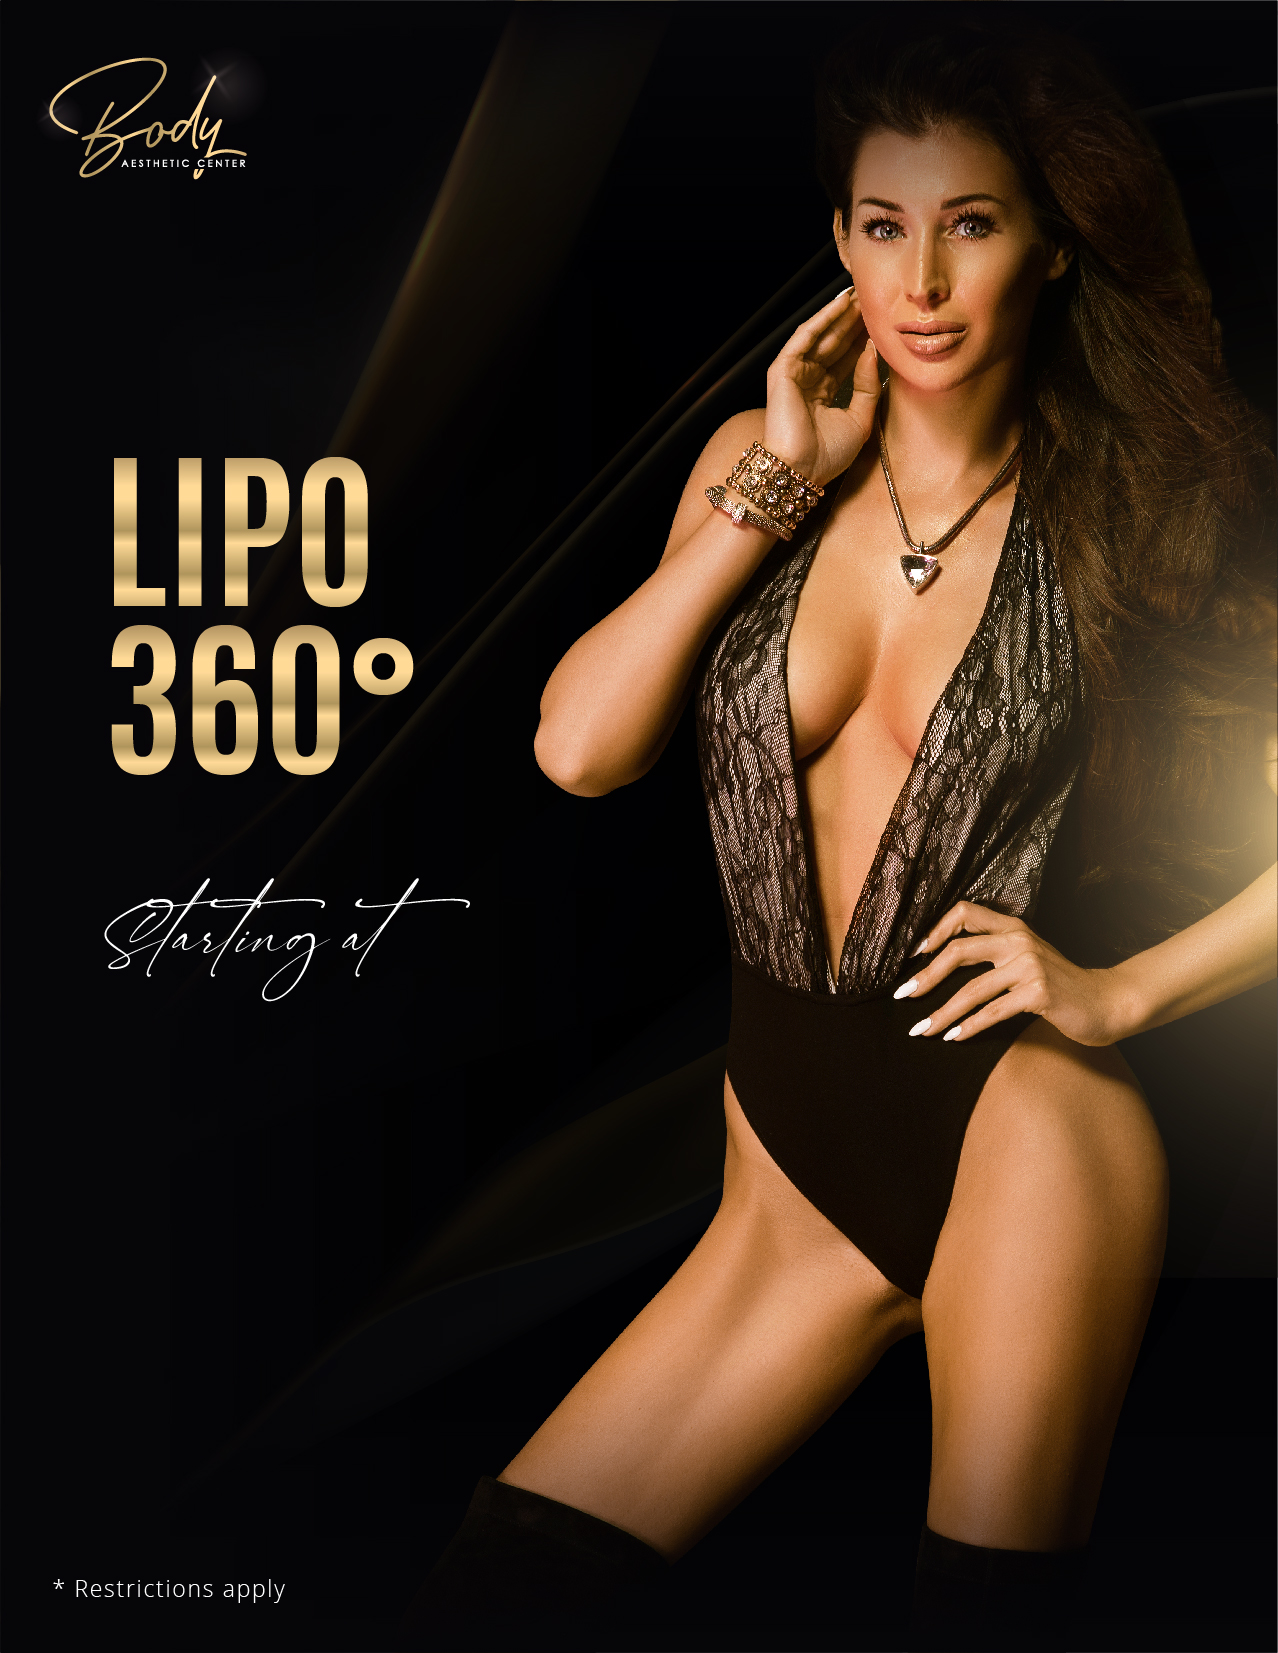 Liposuction 360° starting at $3500